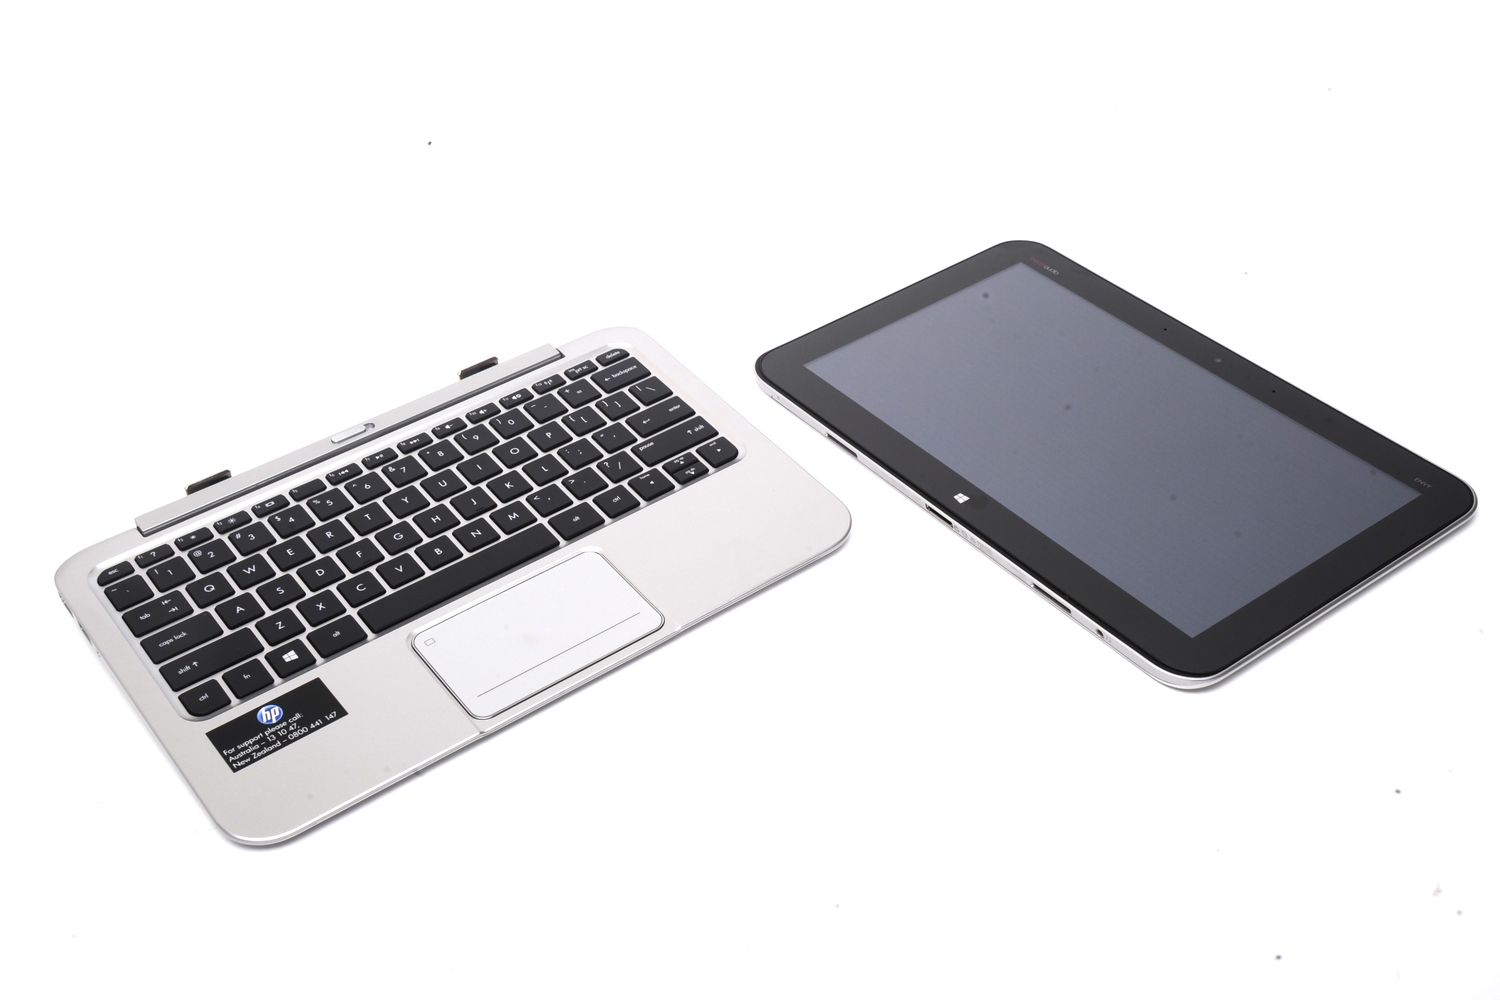 HP Envy X2 Hybrid PC 2– Tablet Specs & Price Nigeriantech.com.ng